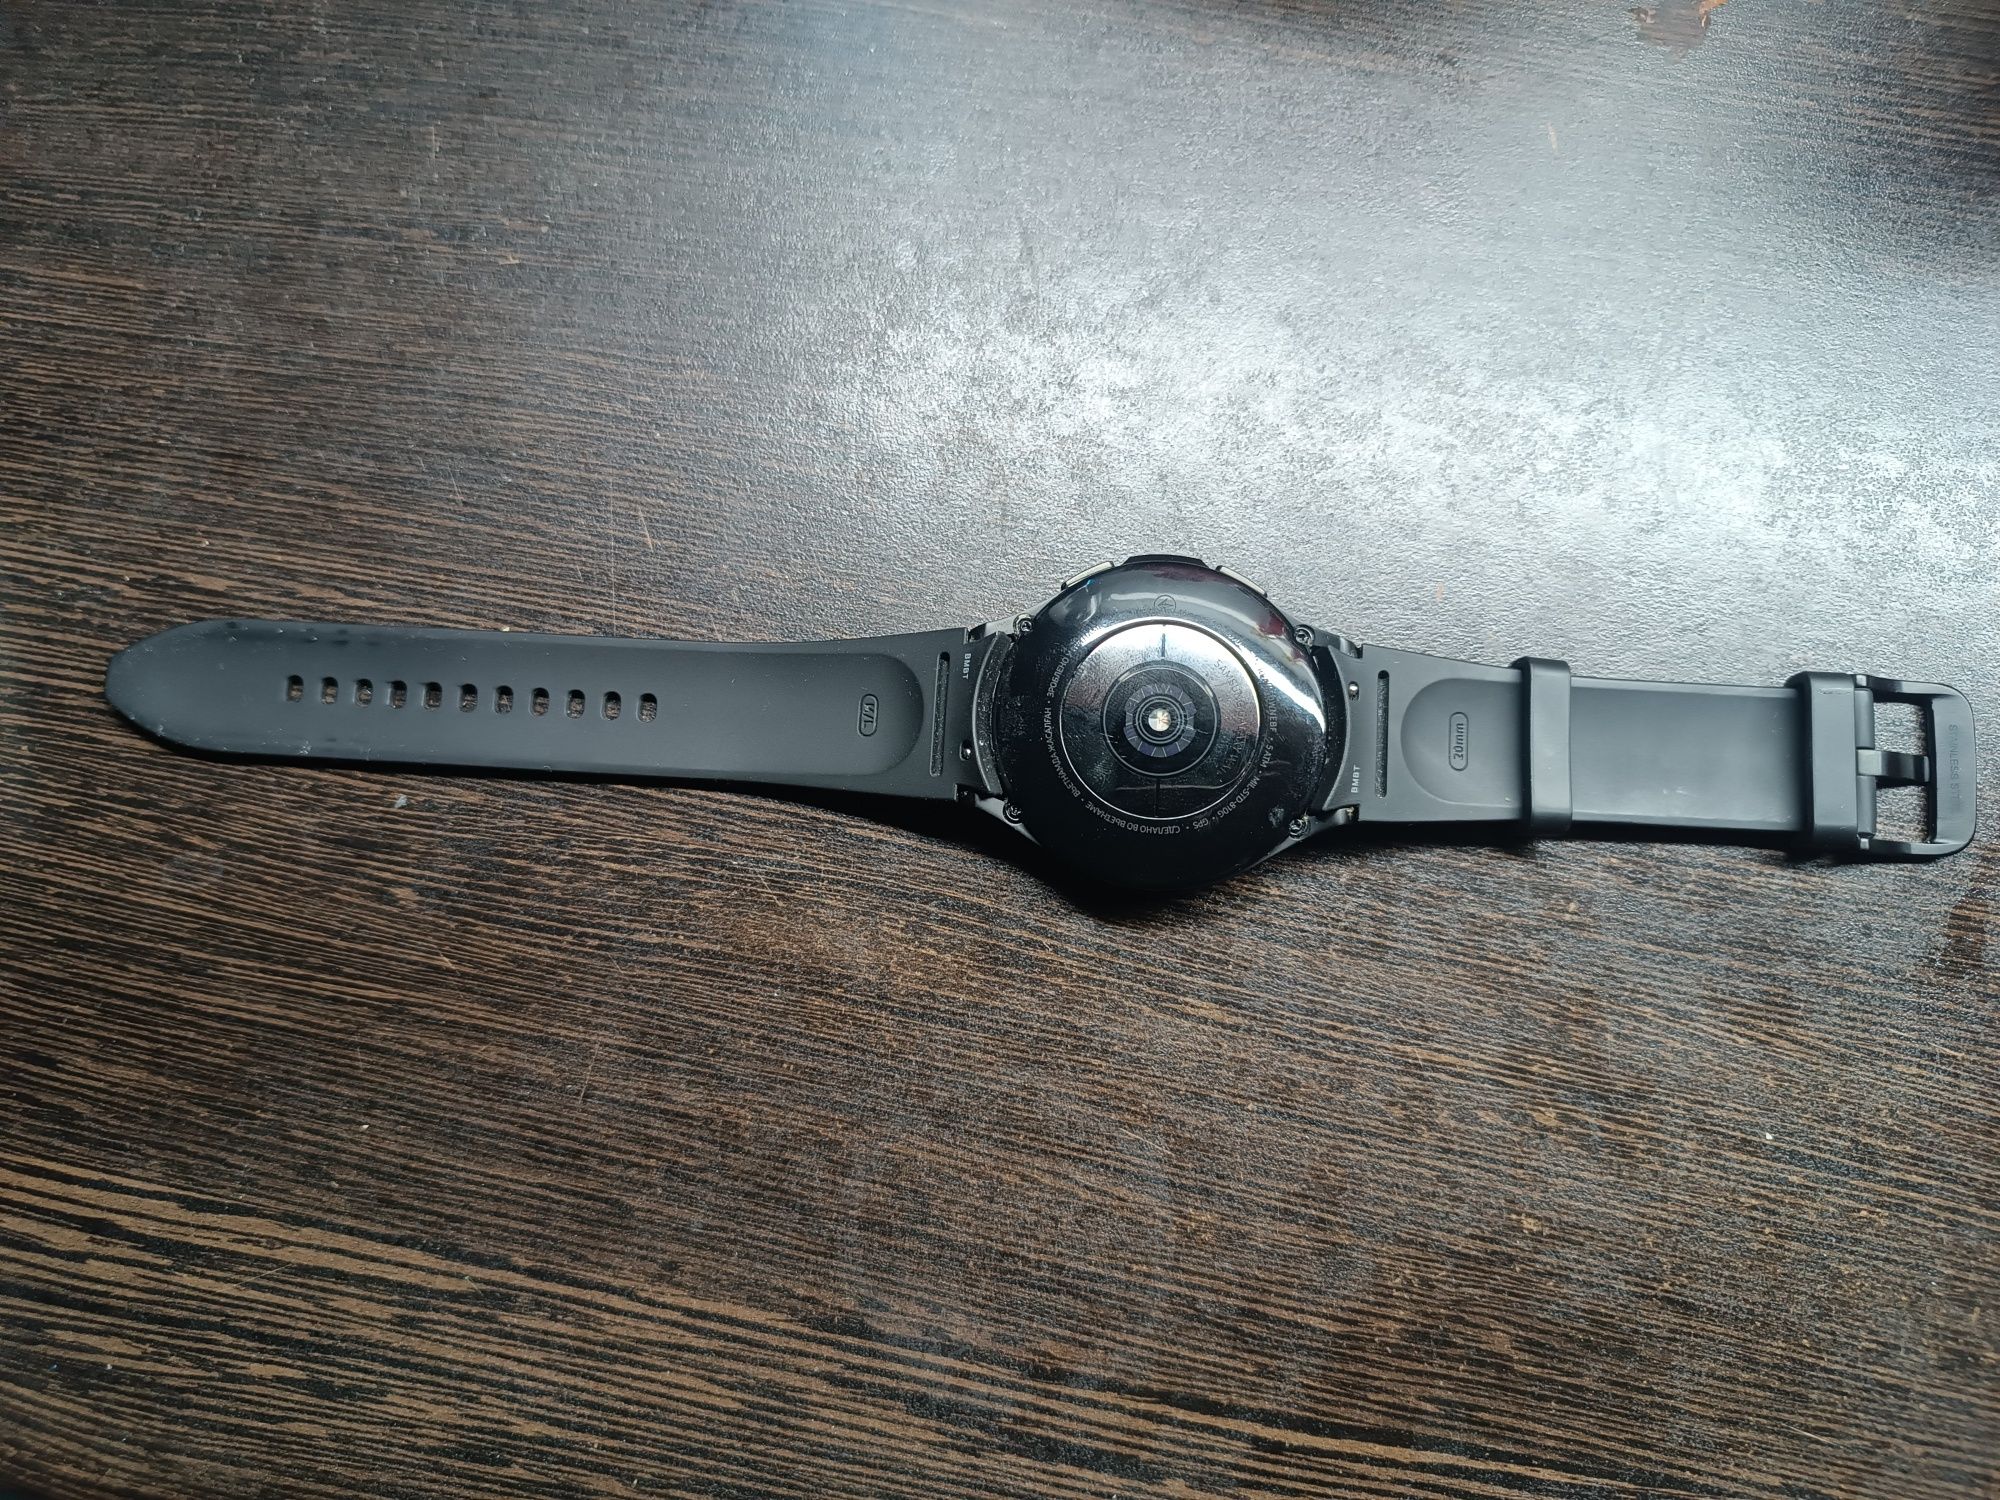 Продам часы Samsung Galaxy Watch